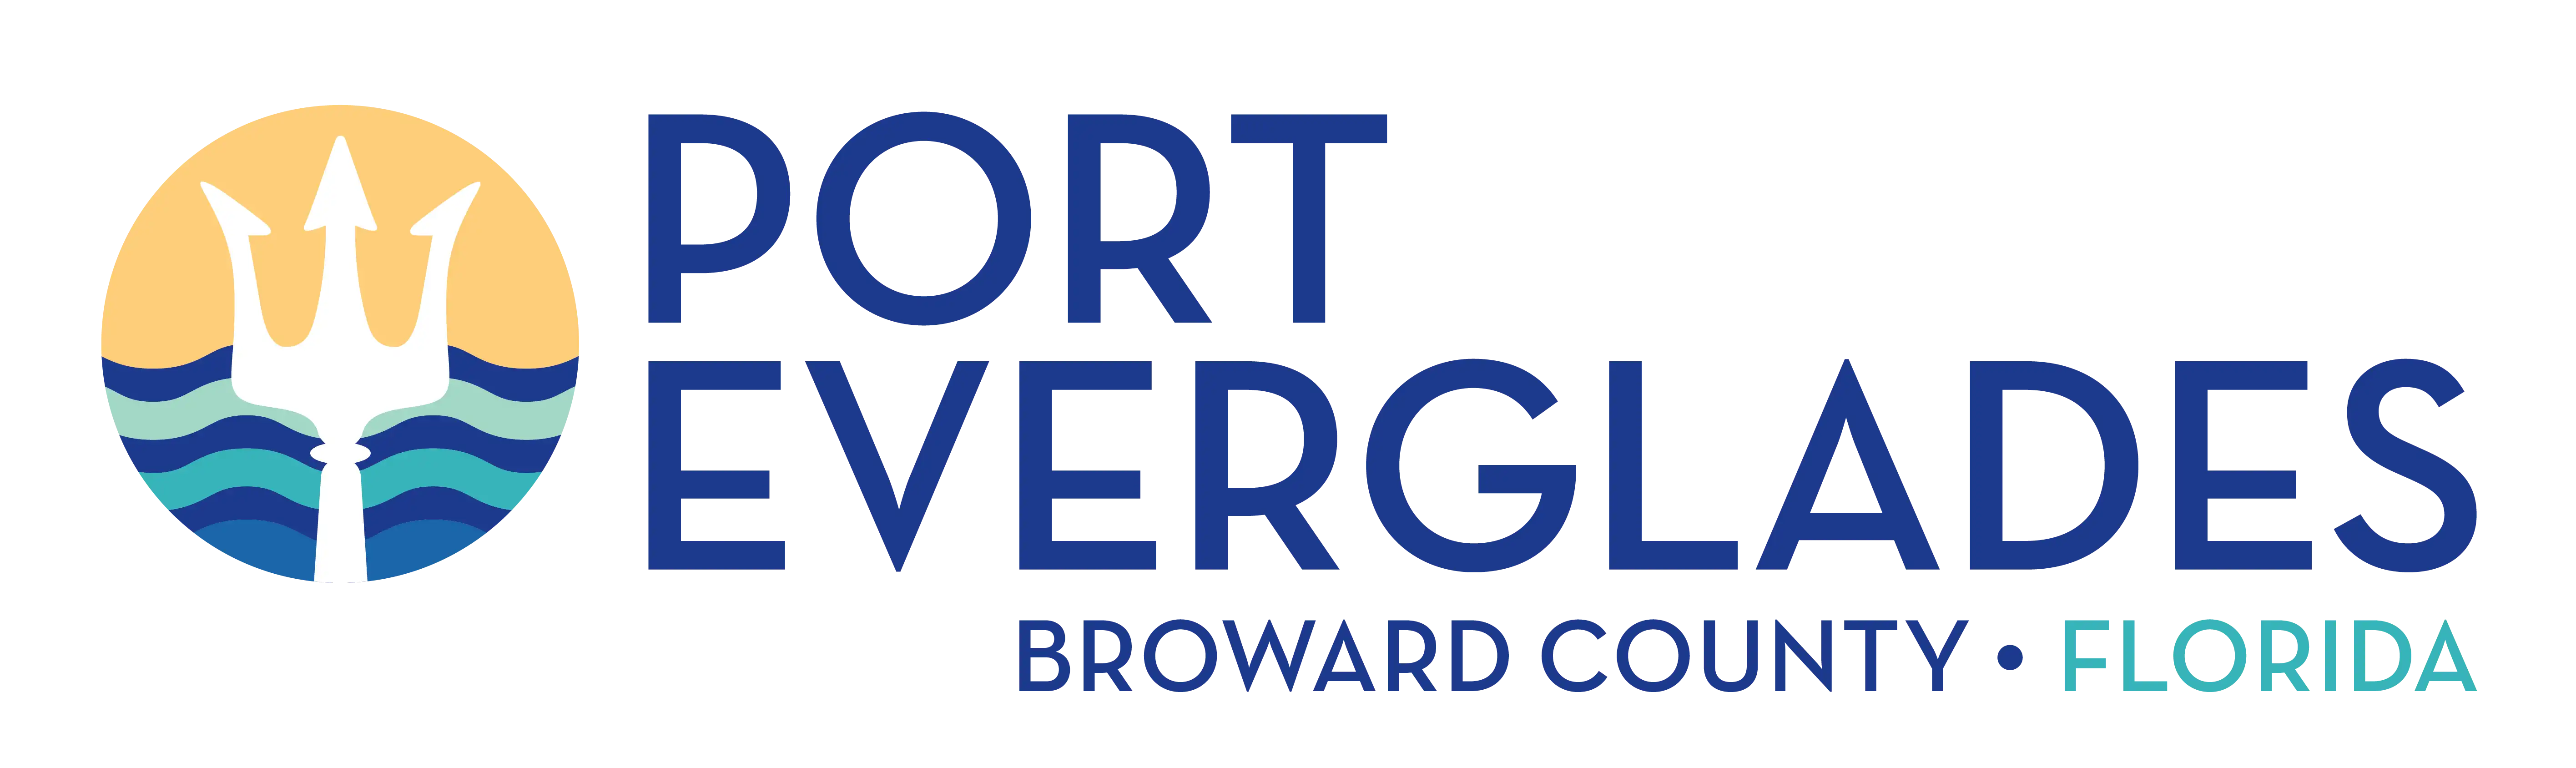 Port Everglades logo 4c with teal Florida